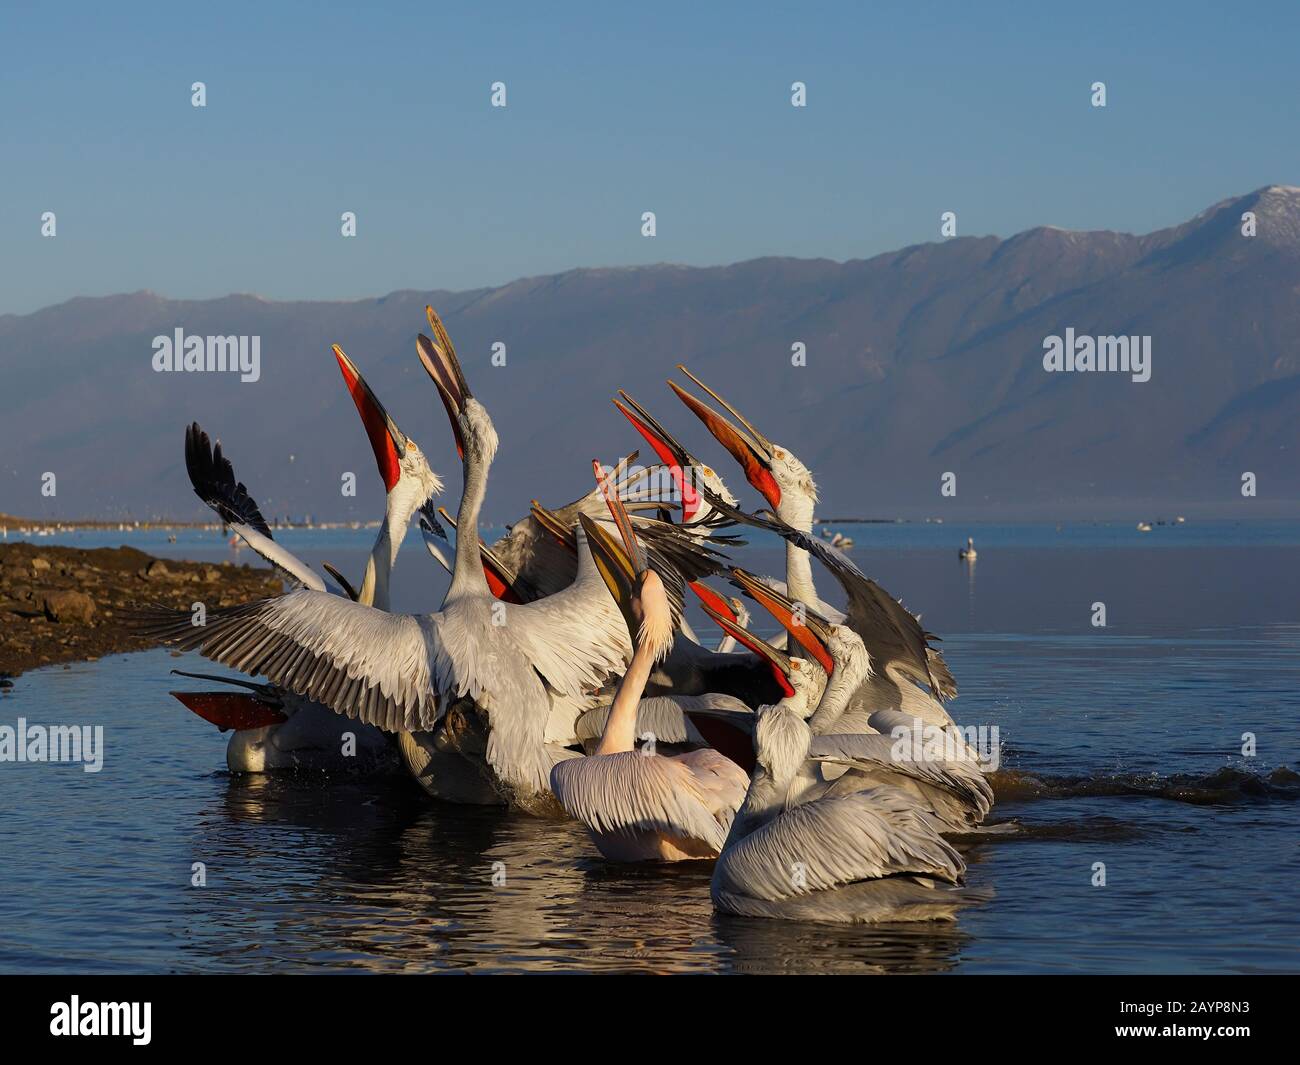 Dalmatian pelican, Pelecanus crispus, group of birds, Greece, February 2020 Stock Photo